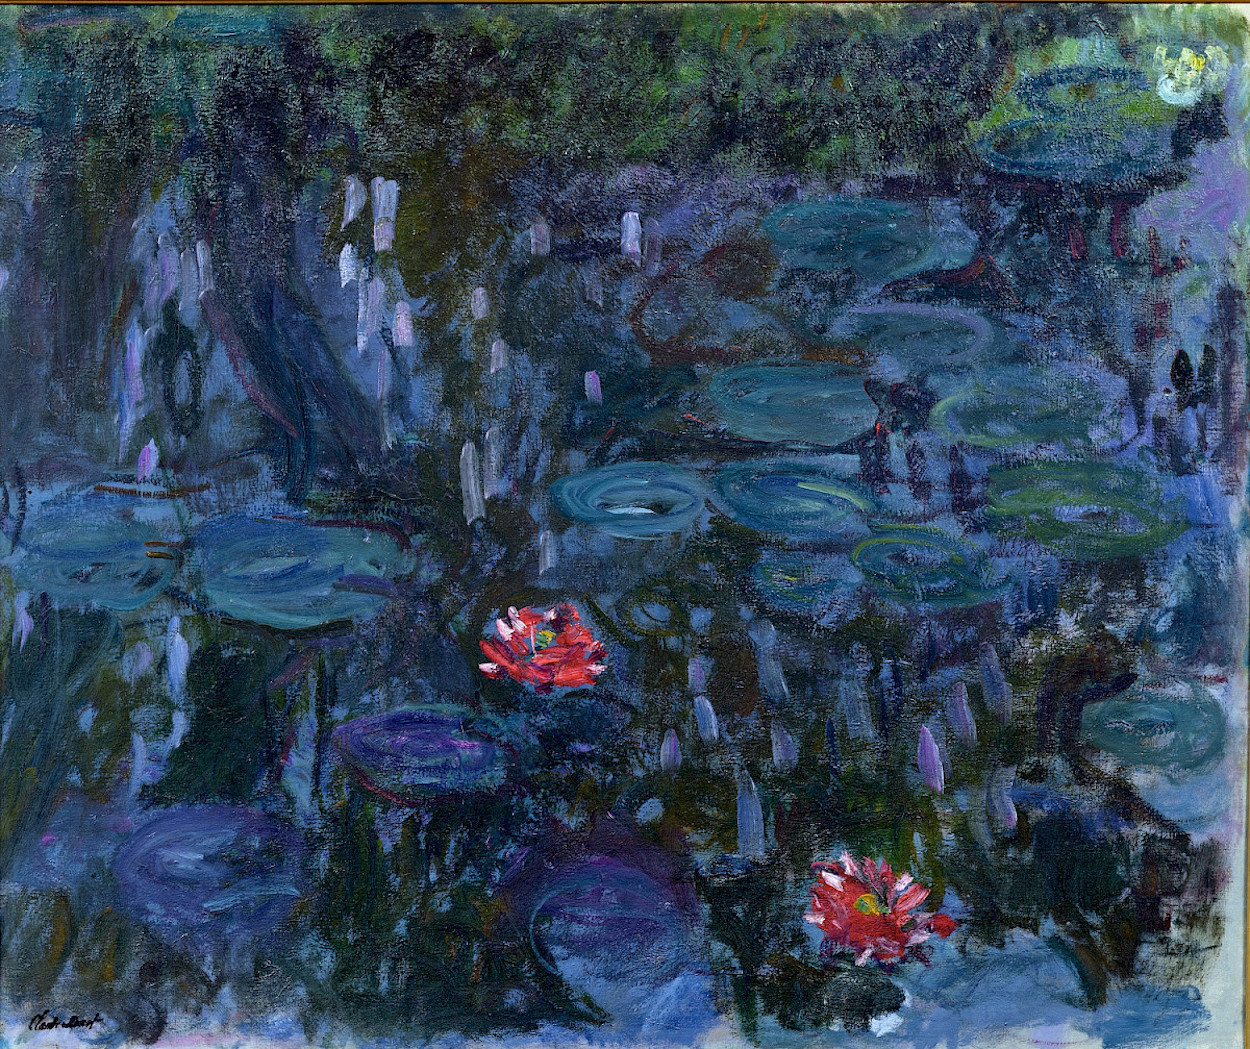 Water Lilies by Claude Monet - 1919 - 155 x 131 cm Musée Marmottan Monet